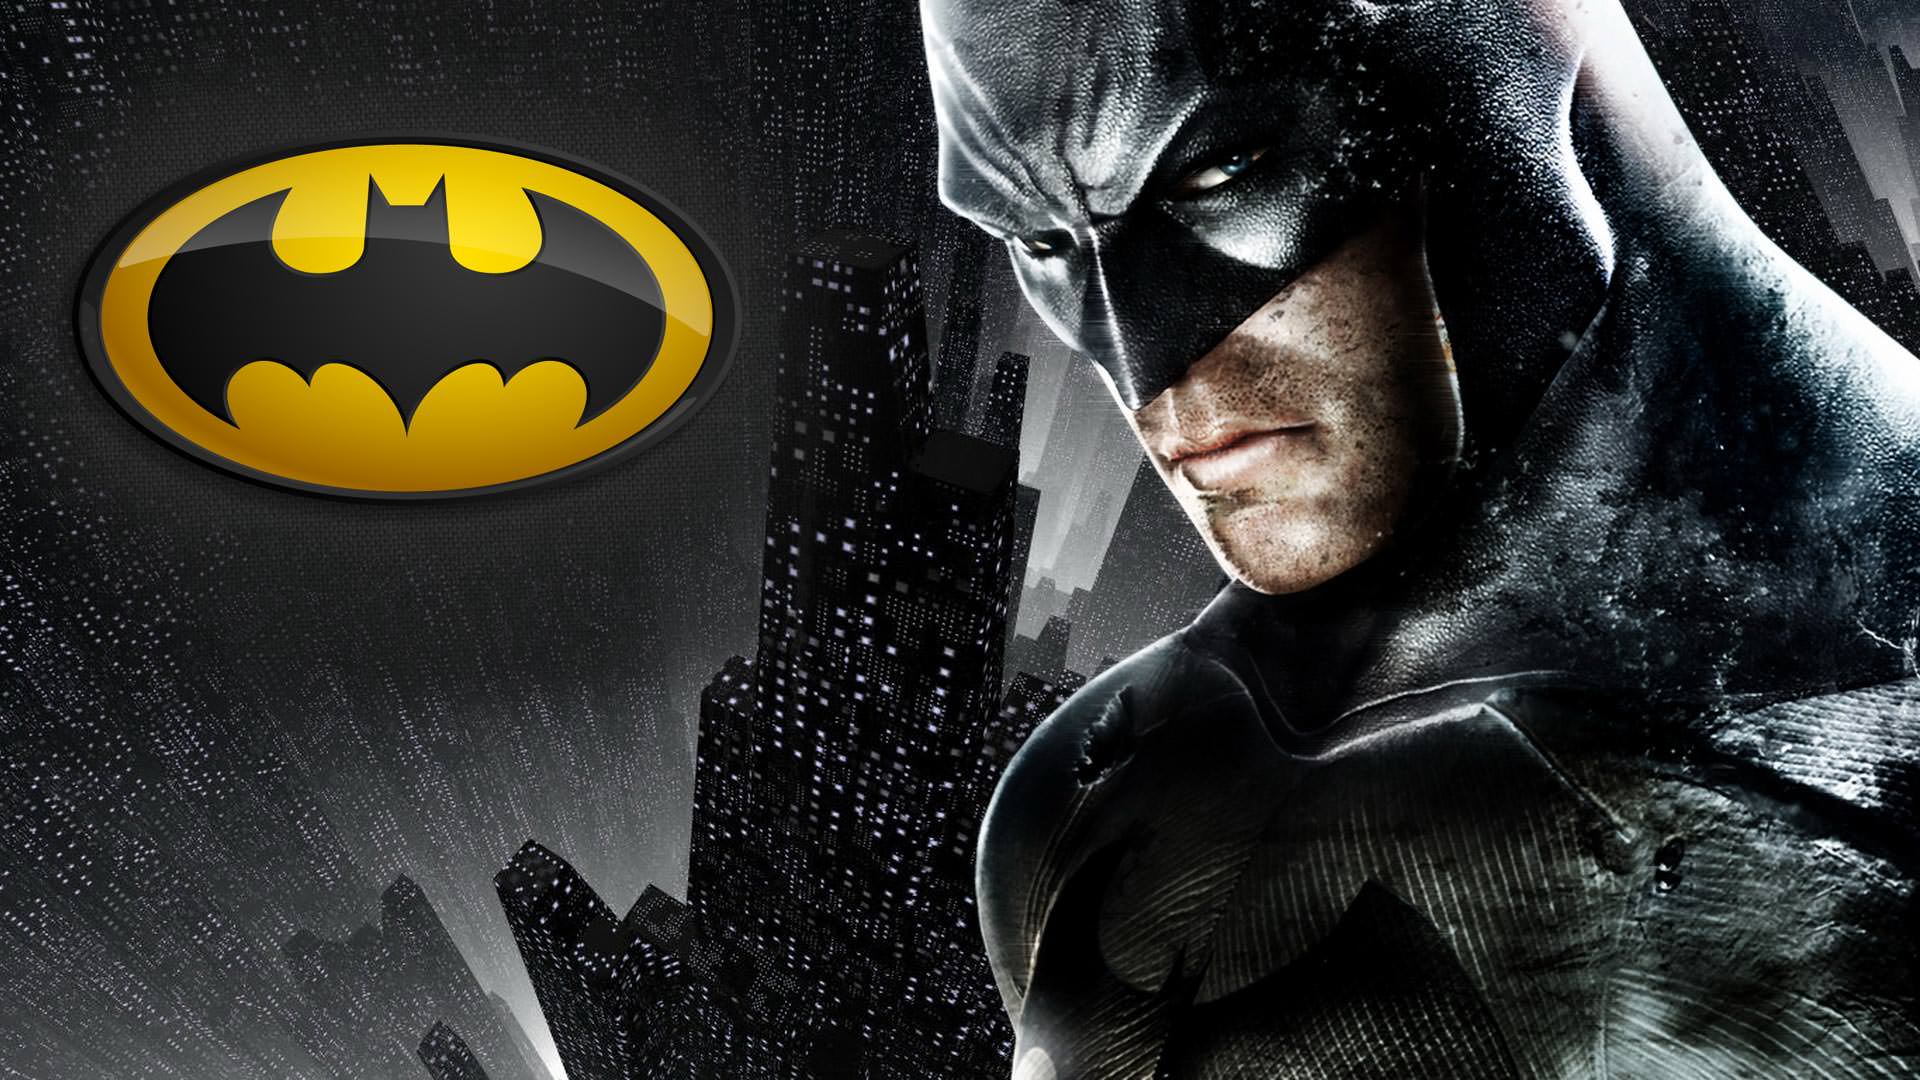 Batman Cafe is a Dream for all Dark Knight Fans